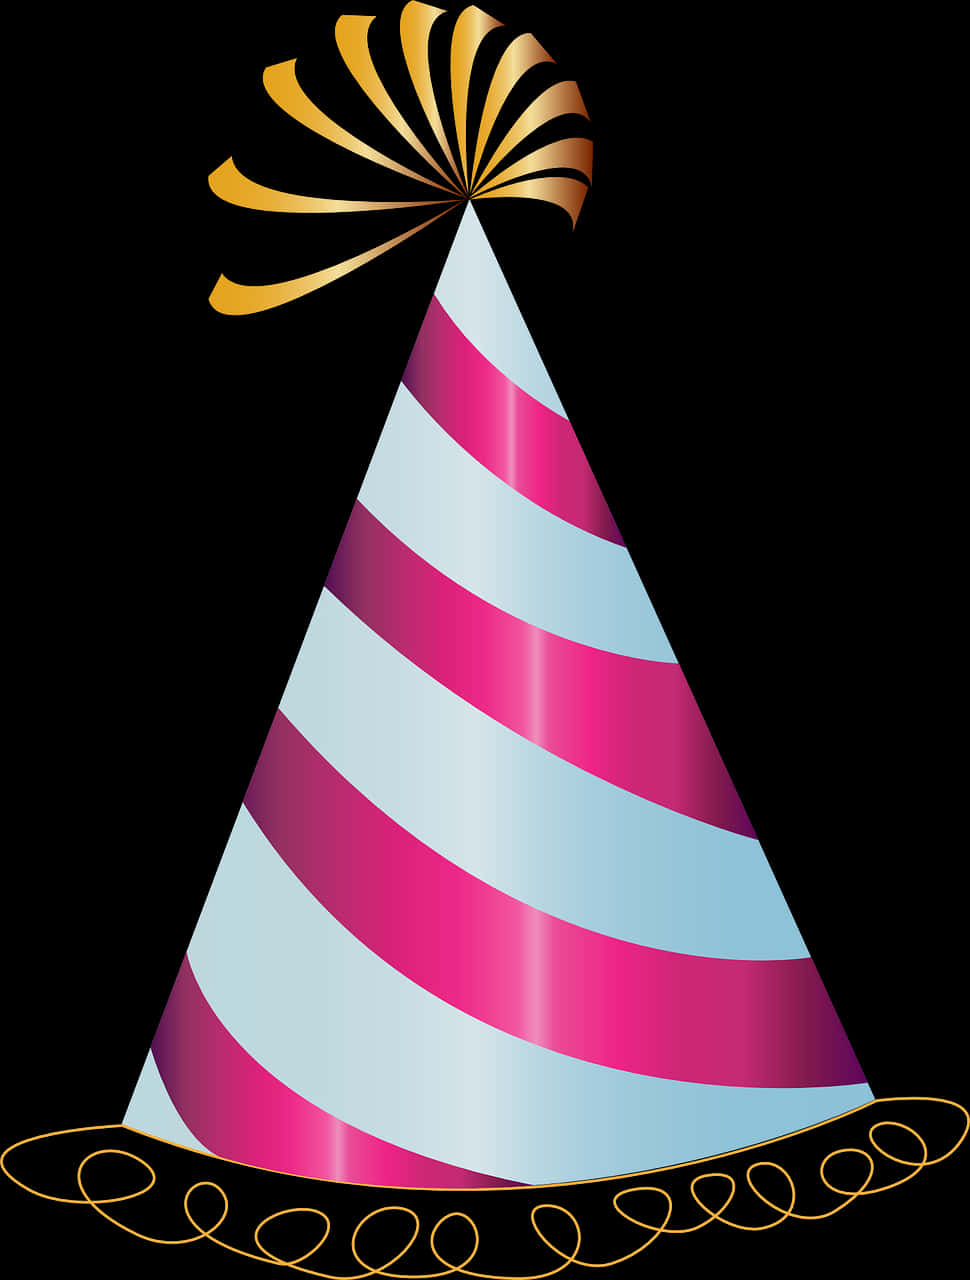 Striped Celebration Party Hat PNG